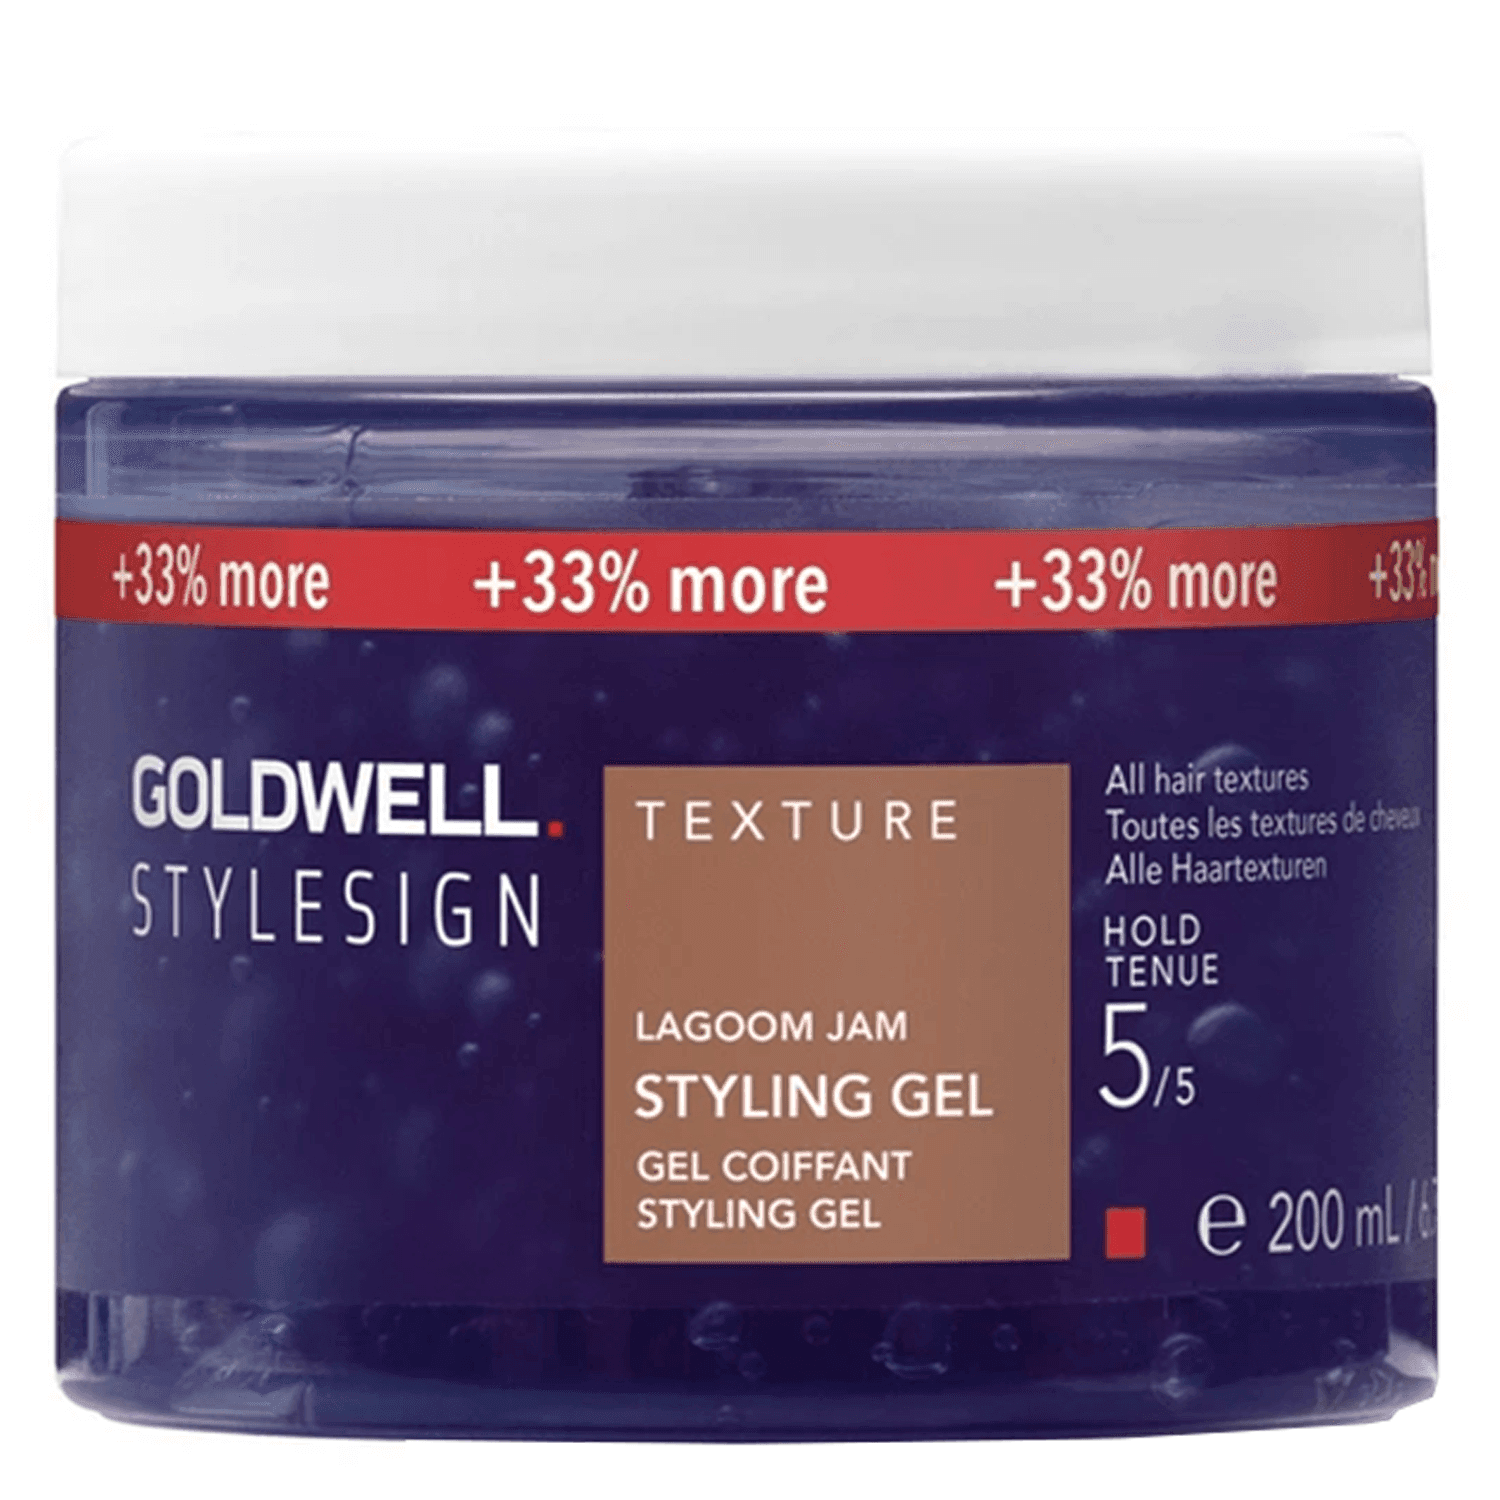 StyleSign - texture lagoom jam styling gel xxl